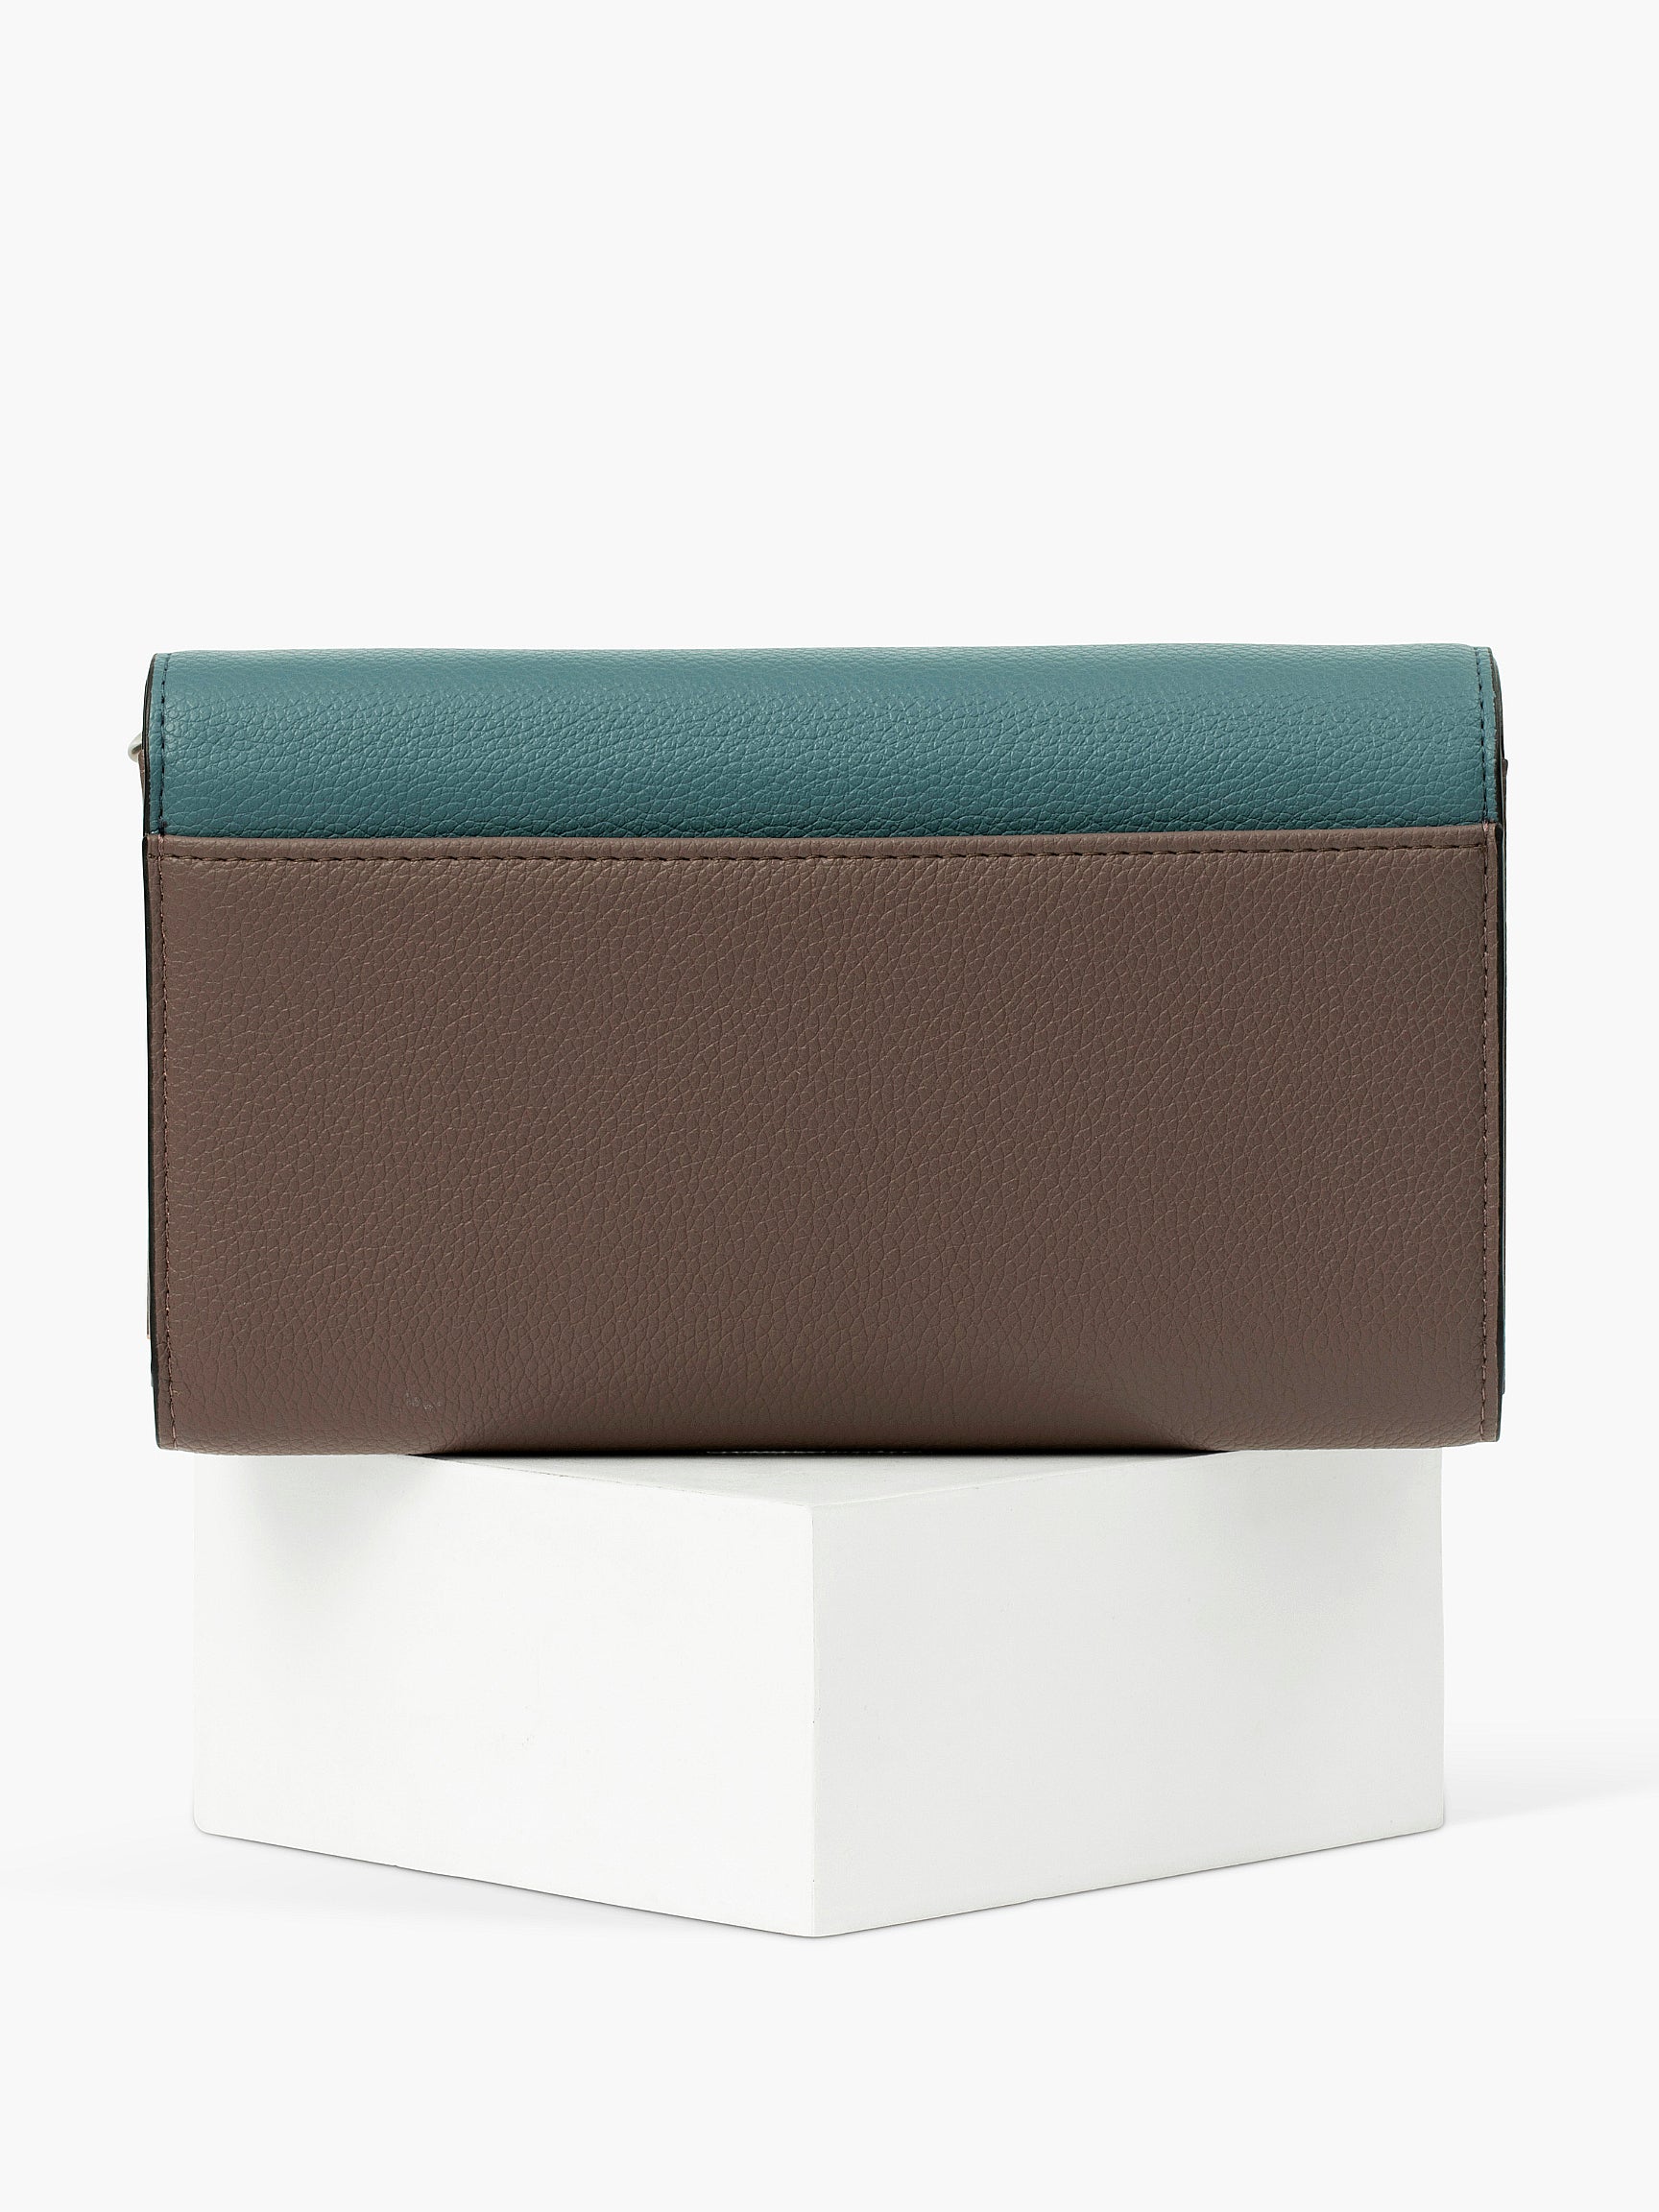 Brittany Color Block Wallet - Teal